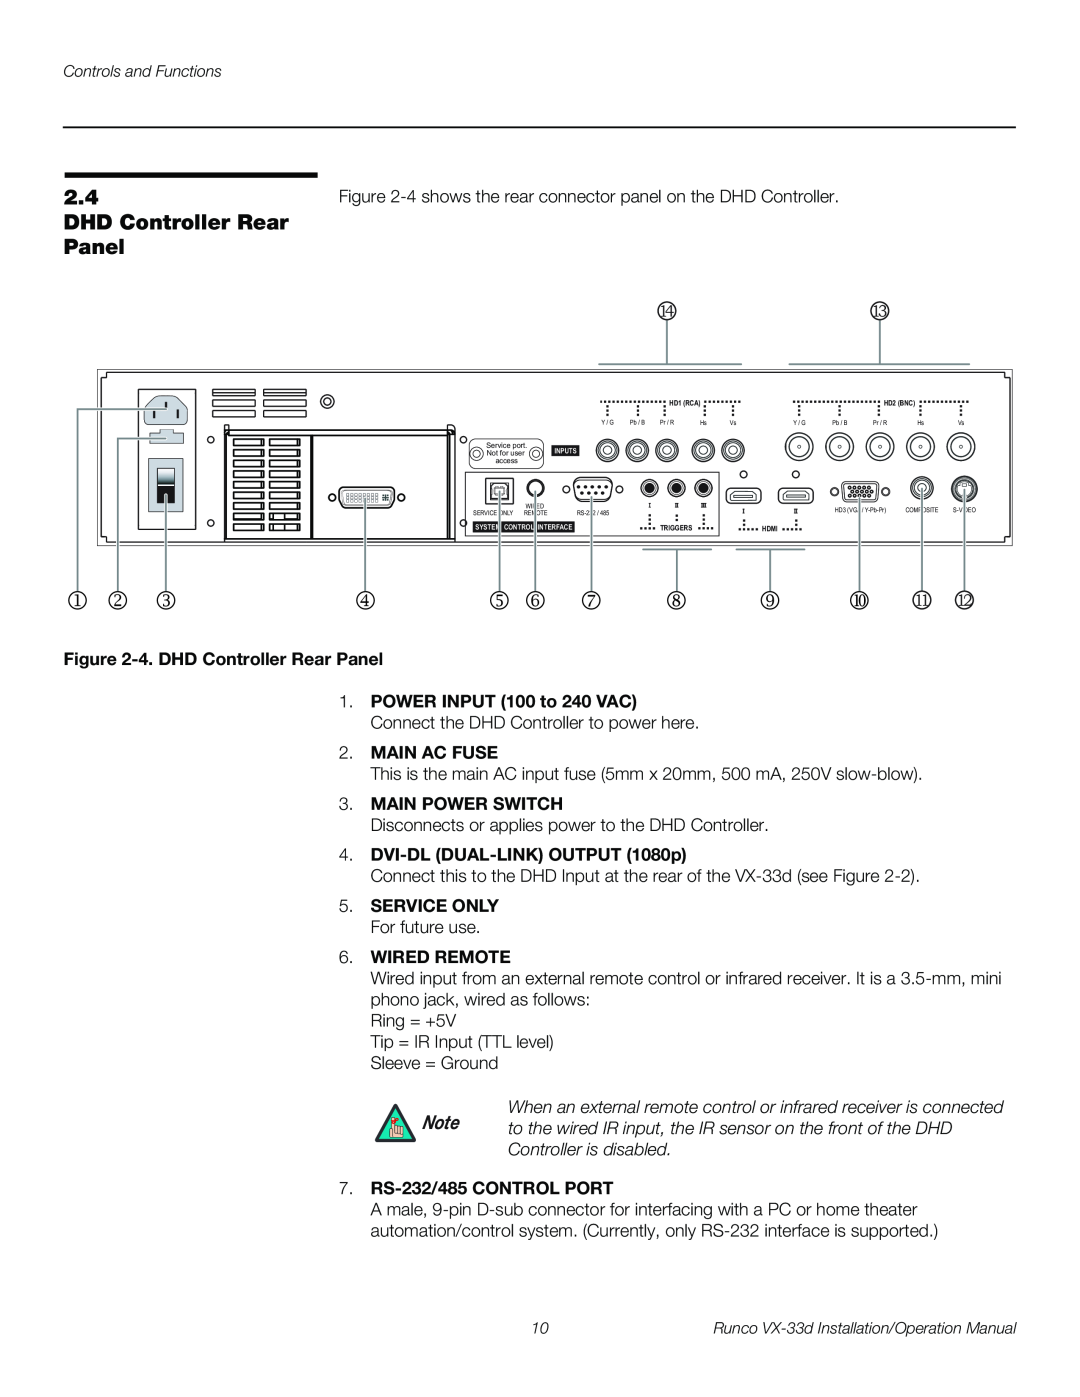 Runco VX-33D 4. DHD Controller Rear Panel, Main Ac Fuse, Main Power Switch, DVI-DL DUAL-LINK OUTPUT 1080p, 5 6 7 